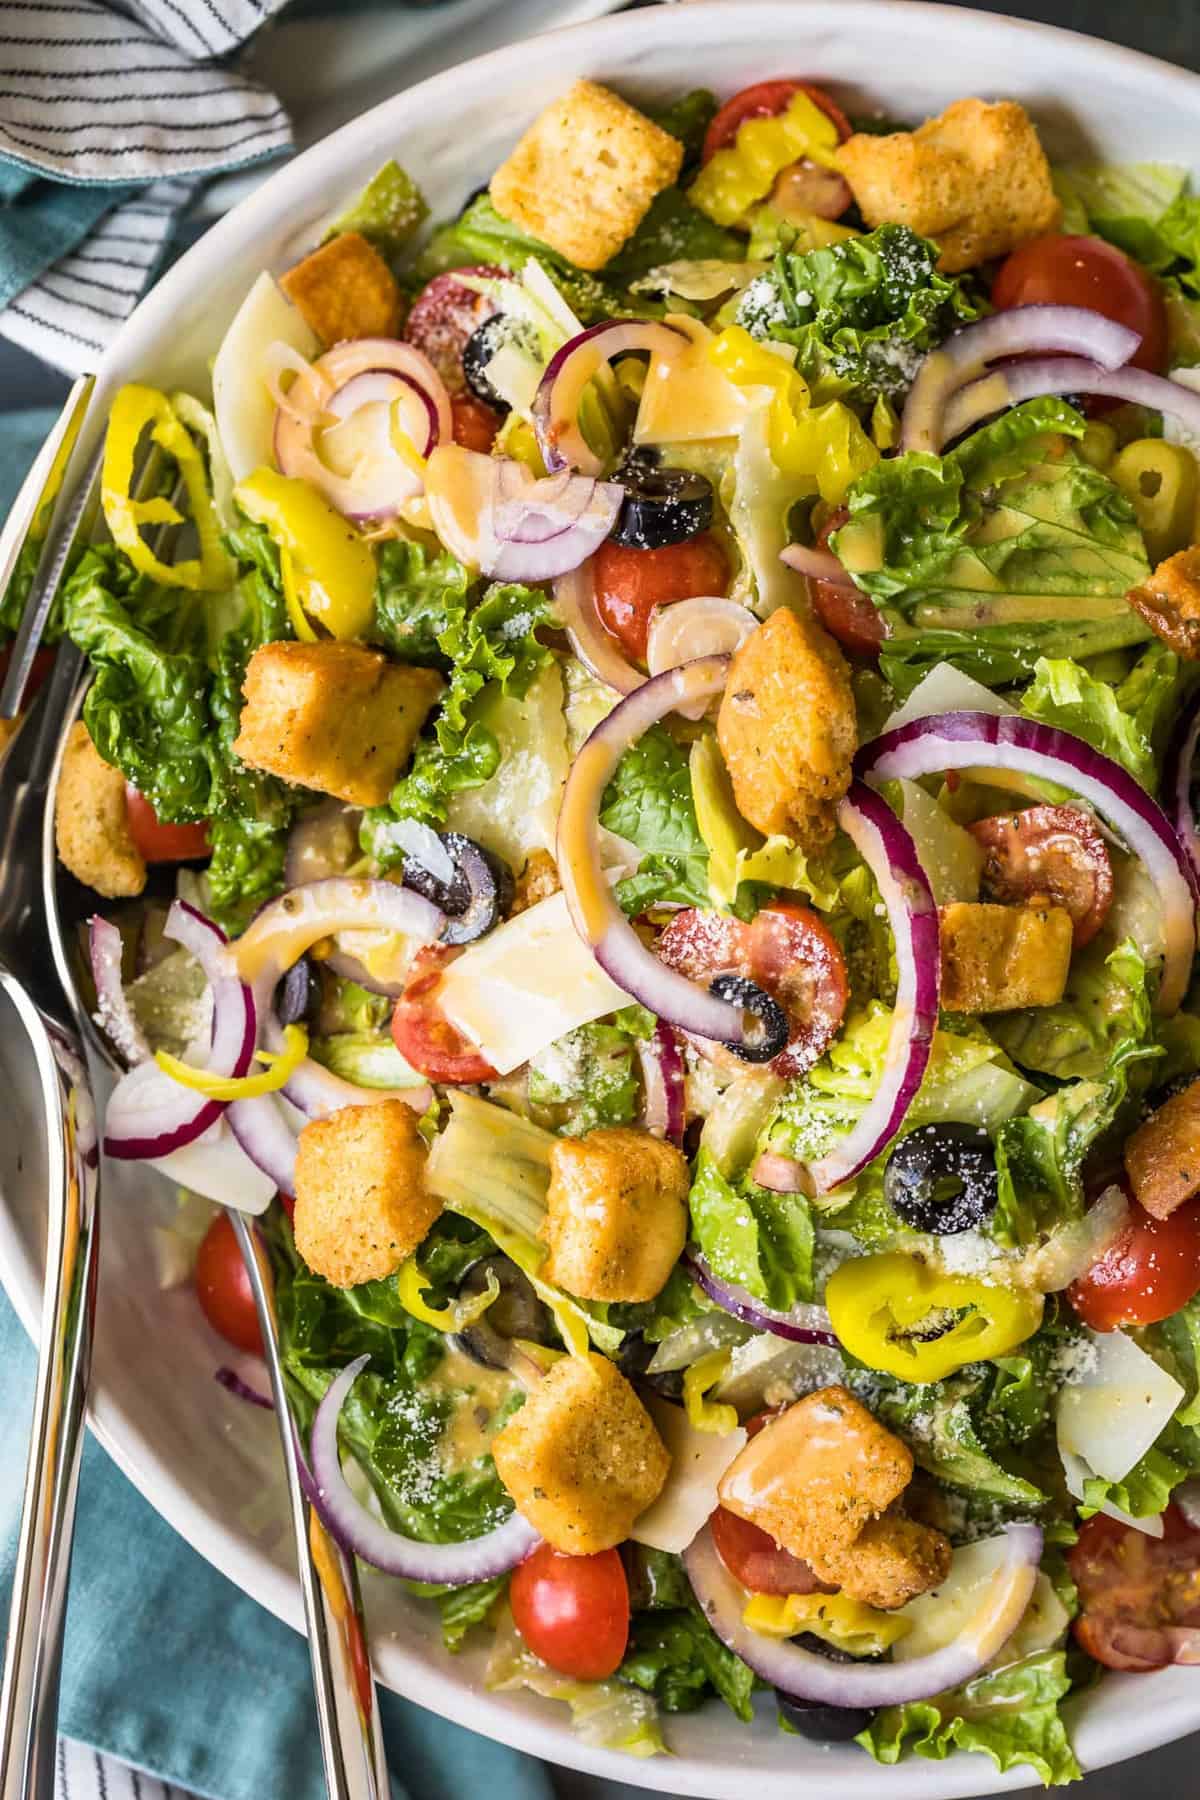 https://www.thecookierookie.com/wp-content/uploads/2019/09/olive-garden-salad-with-copycat-dressing-3-of-8.jpg